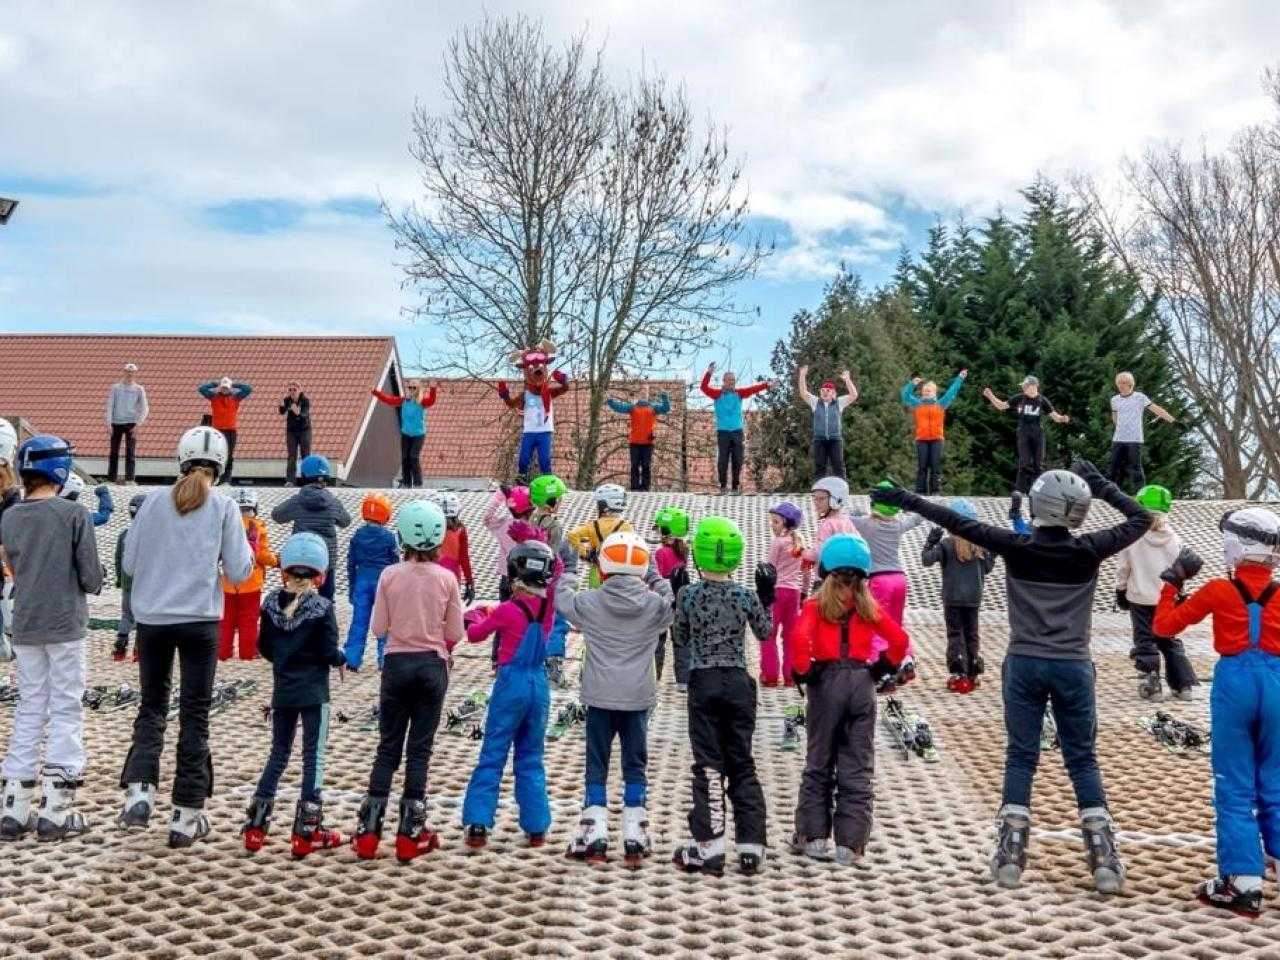 Children on outdoor slopes during lessons at Ski Center Hoofddorp